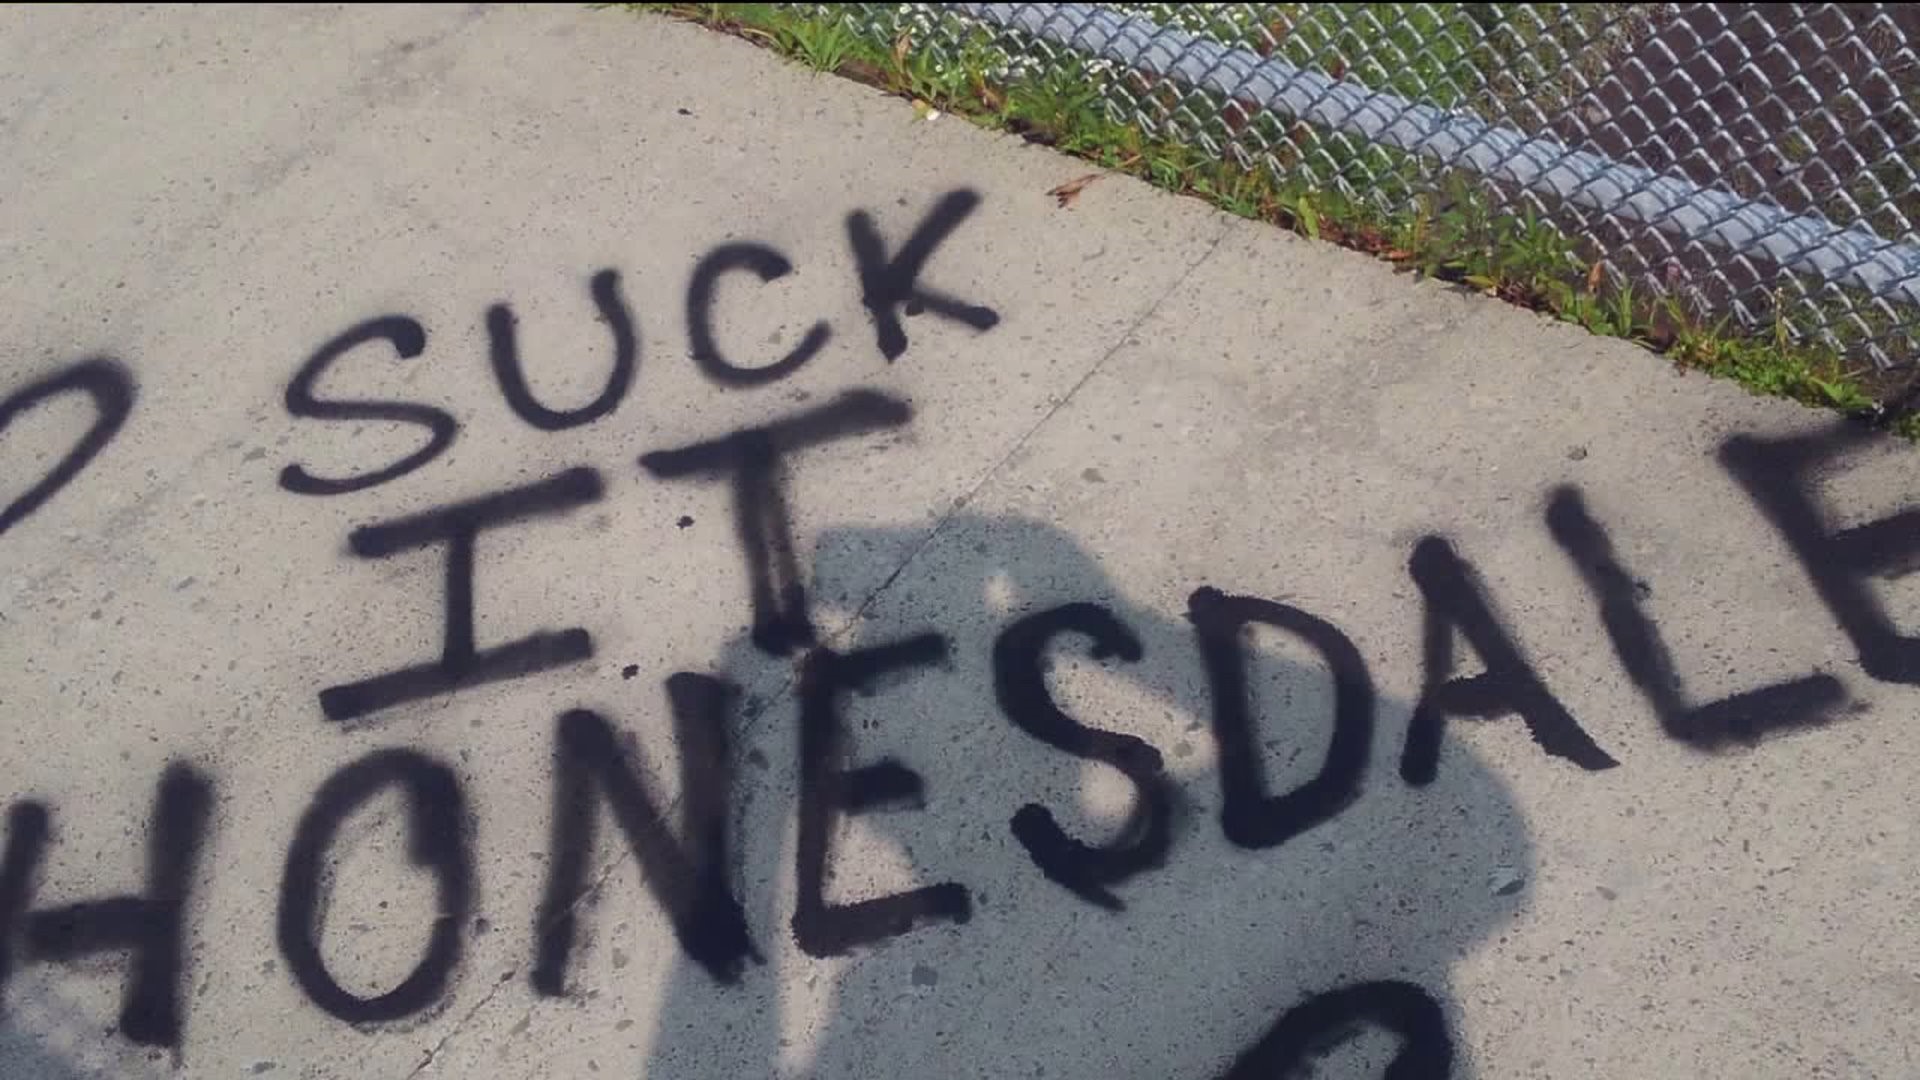 Vandals Spray-Paint Obscene Graffiti on Bridges, Business in Honesdale